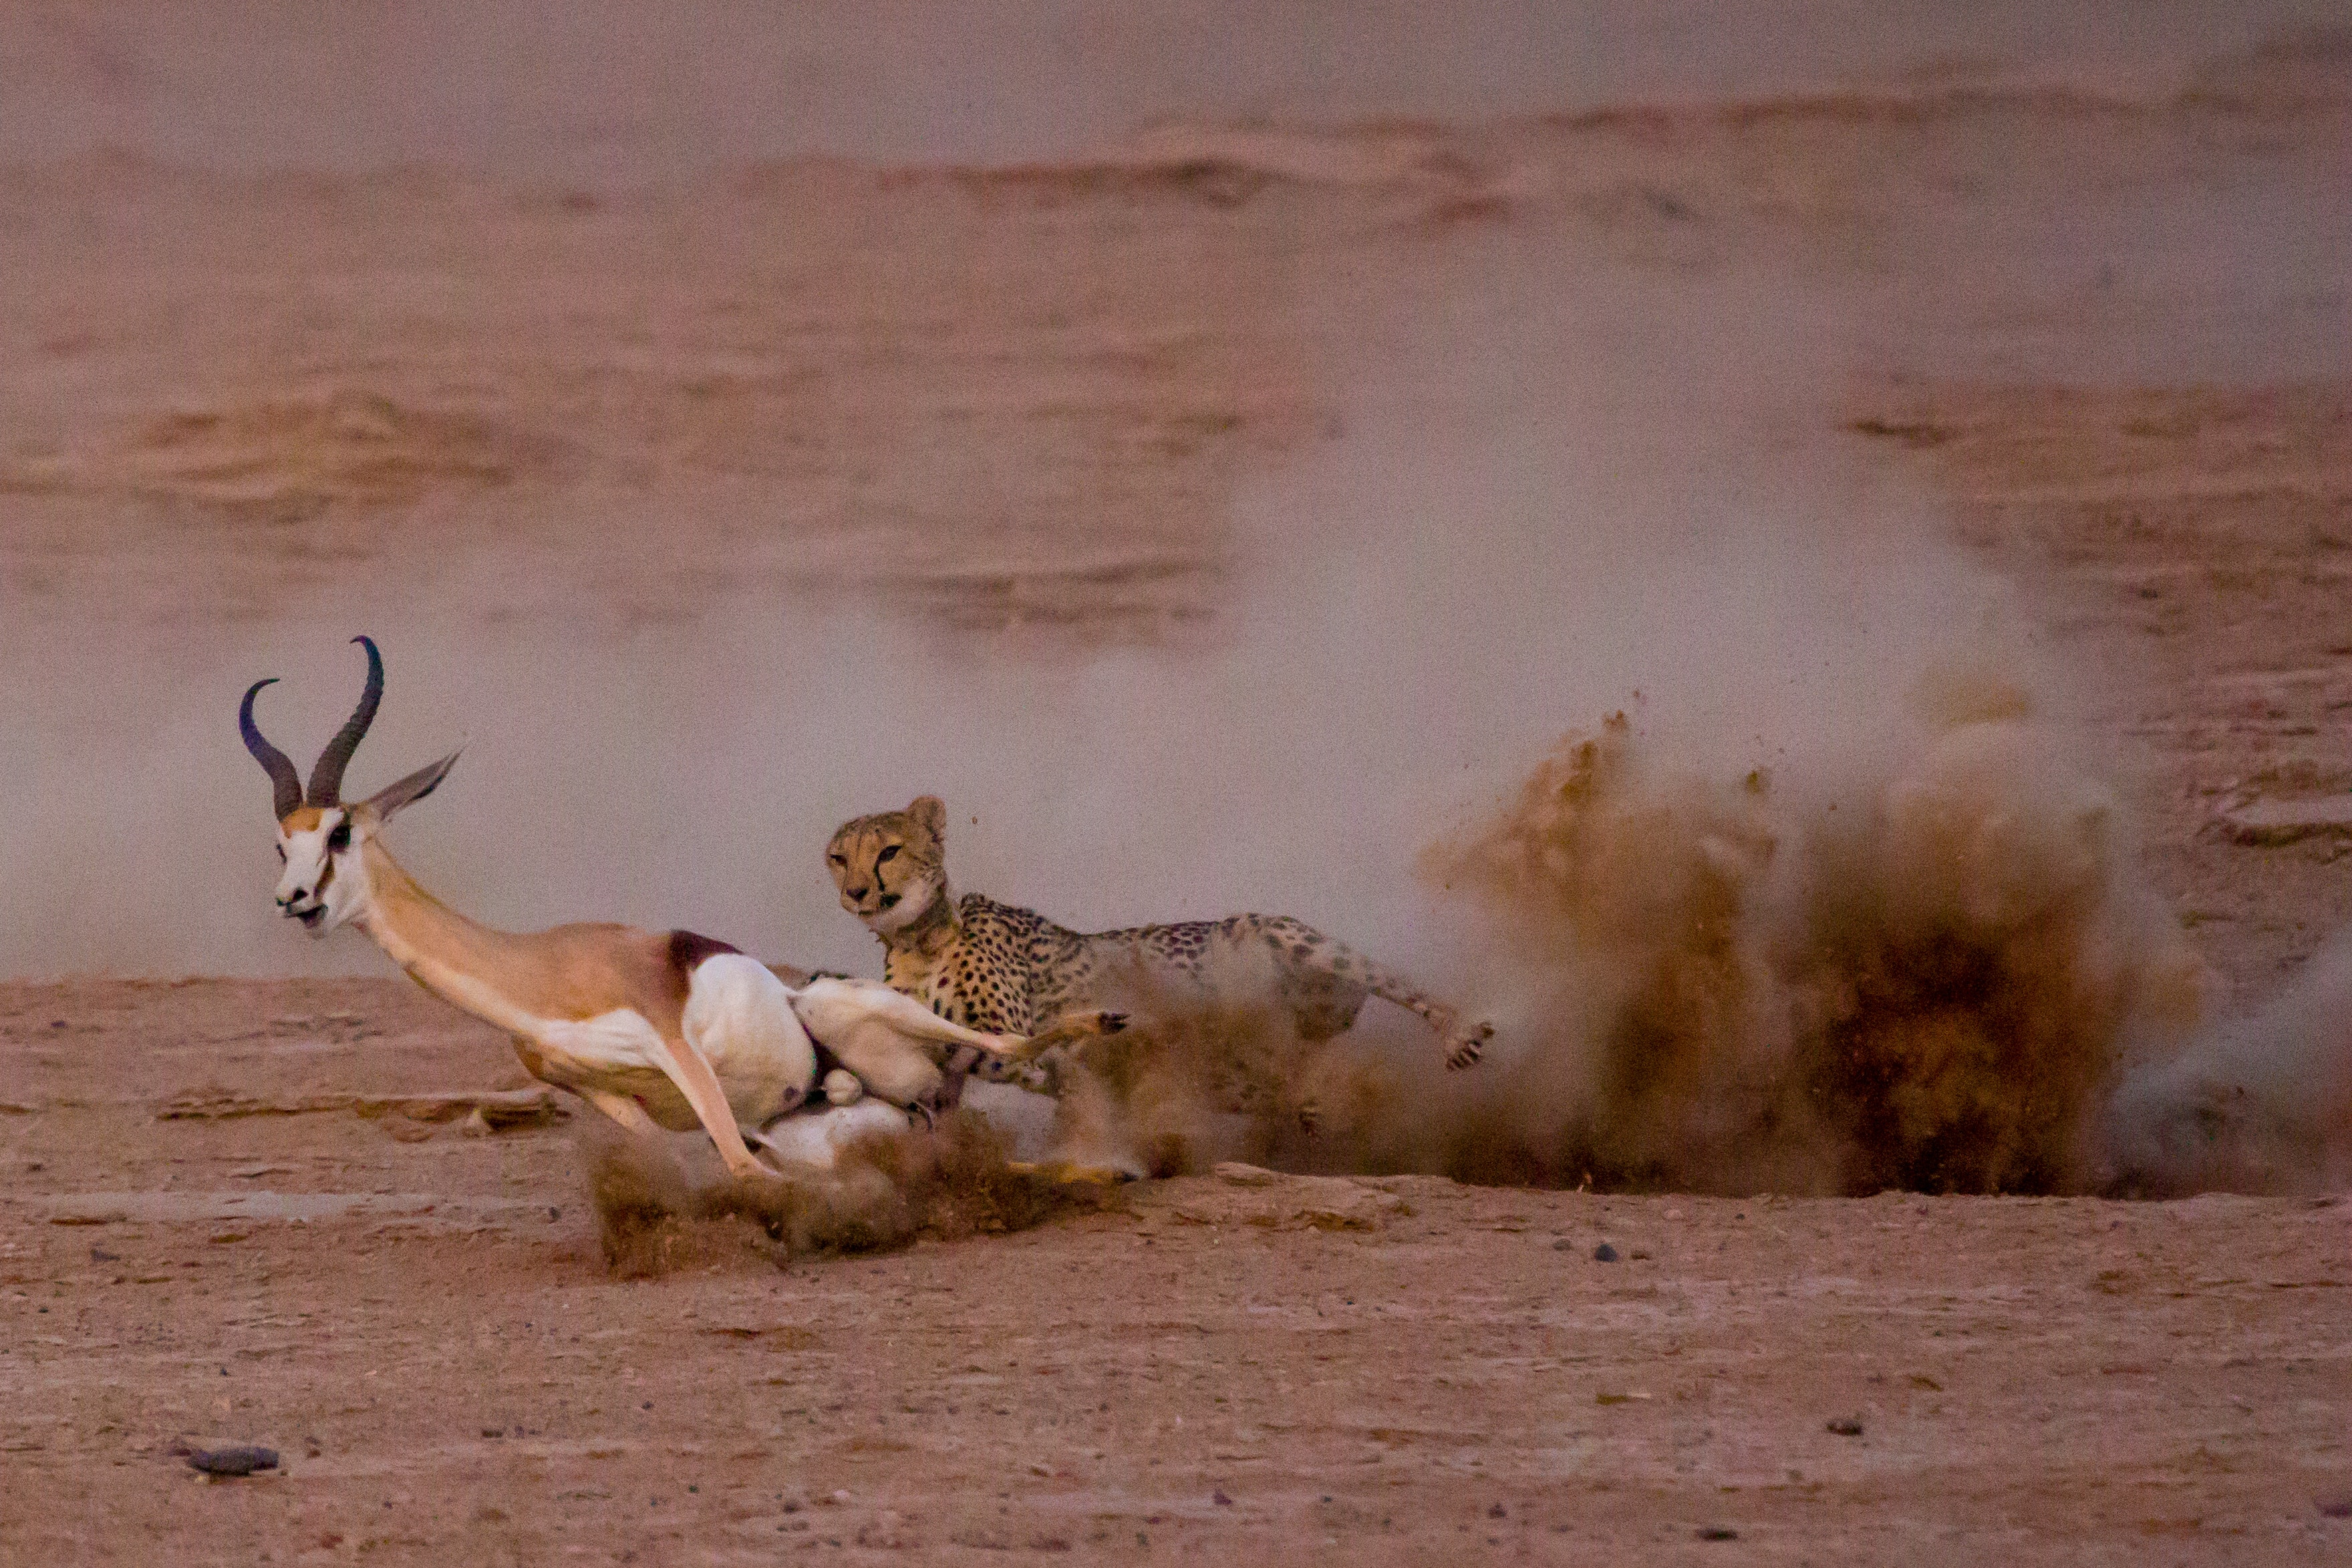 Phenomenal Sequence of a Cheetah Taking Down a Springbok